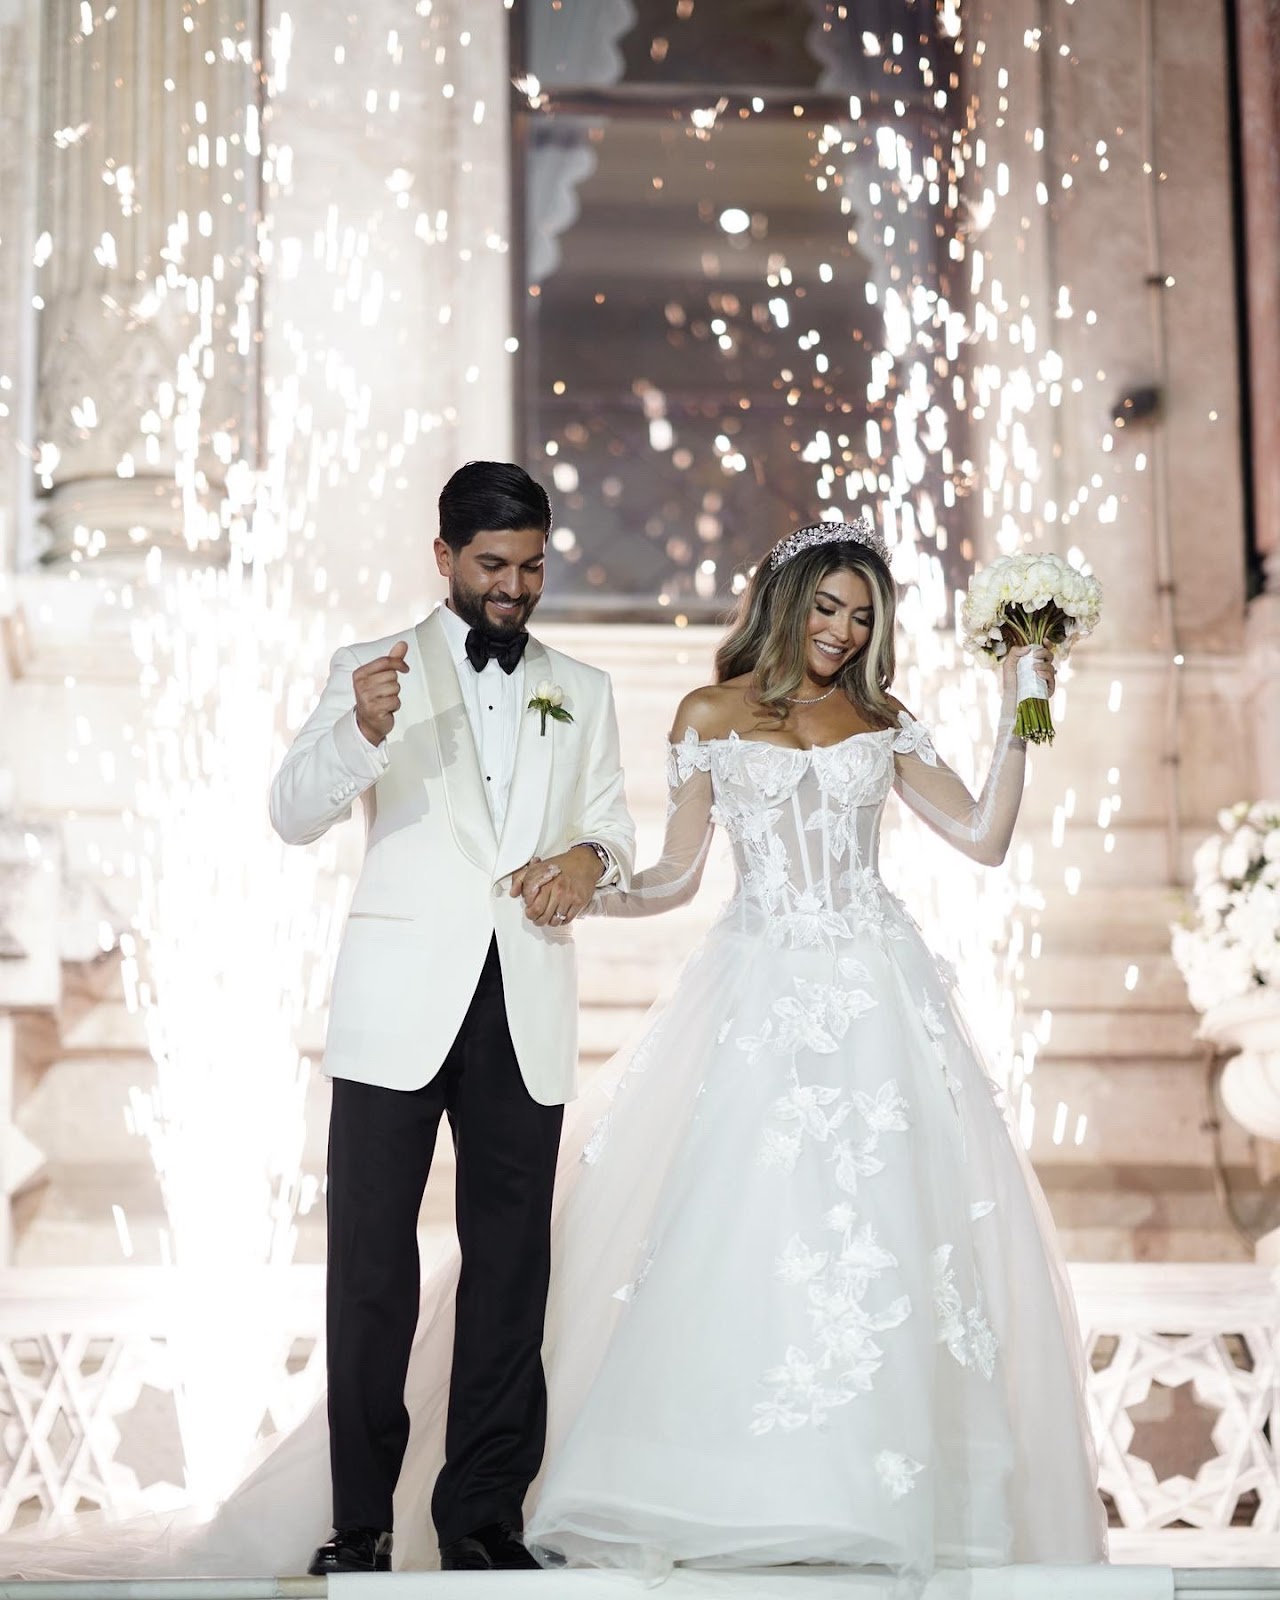 A Dreamy Wedding at Ciragan Palace in Istanbul, Turkey
